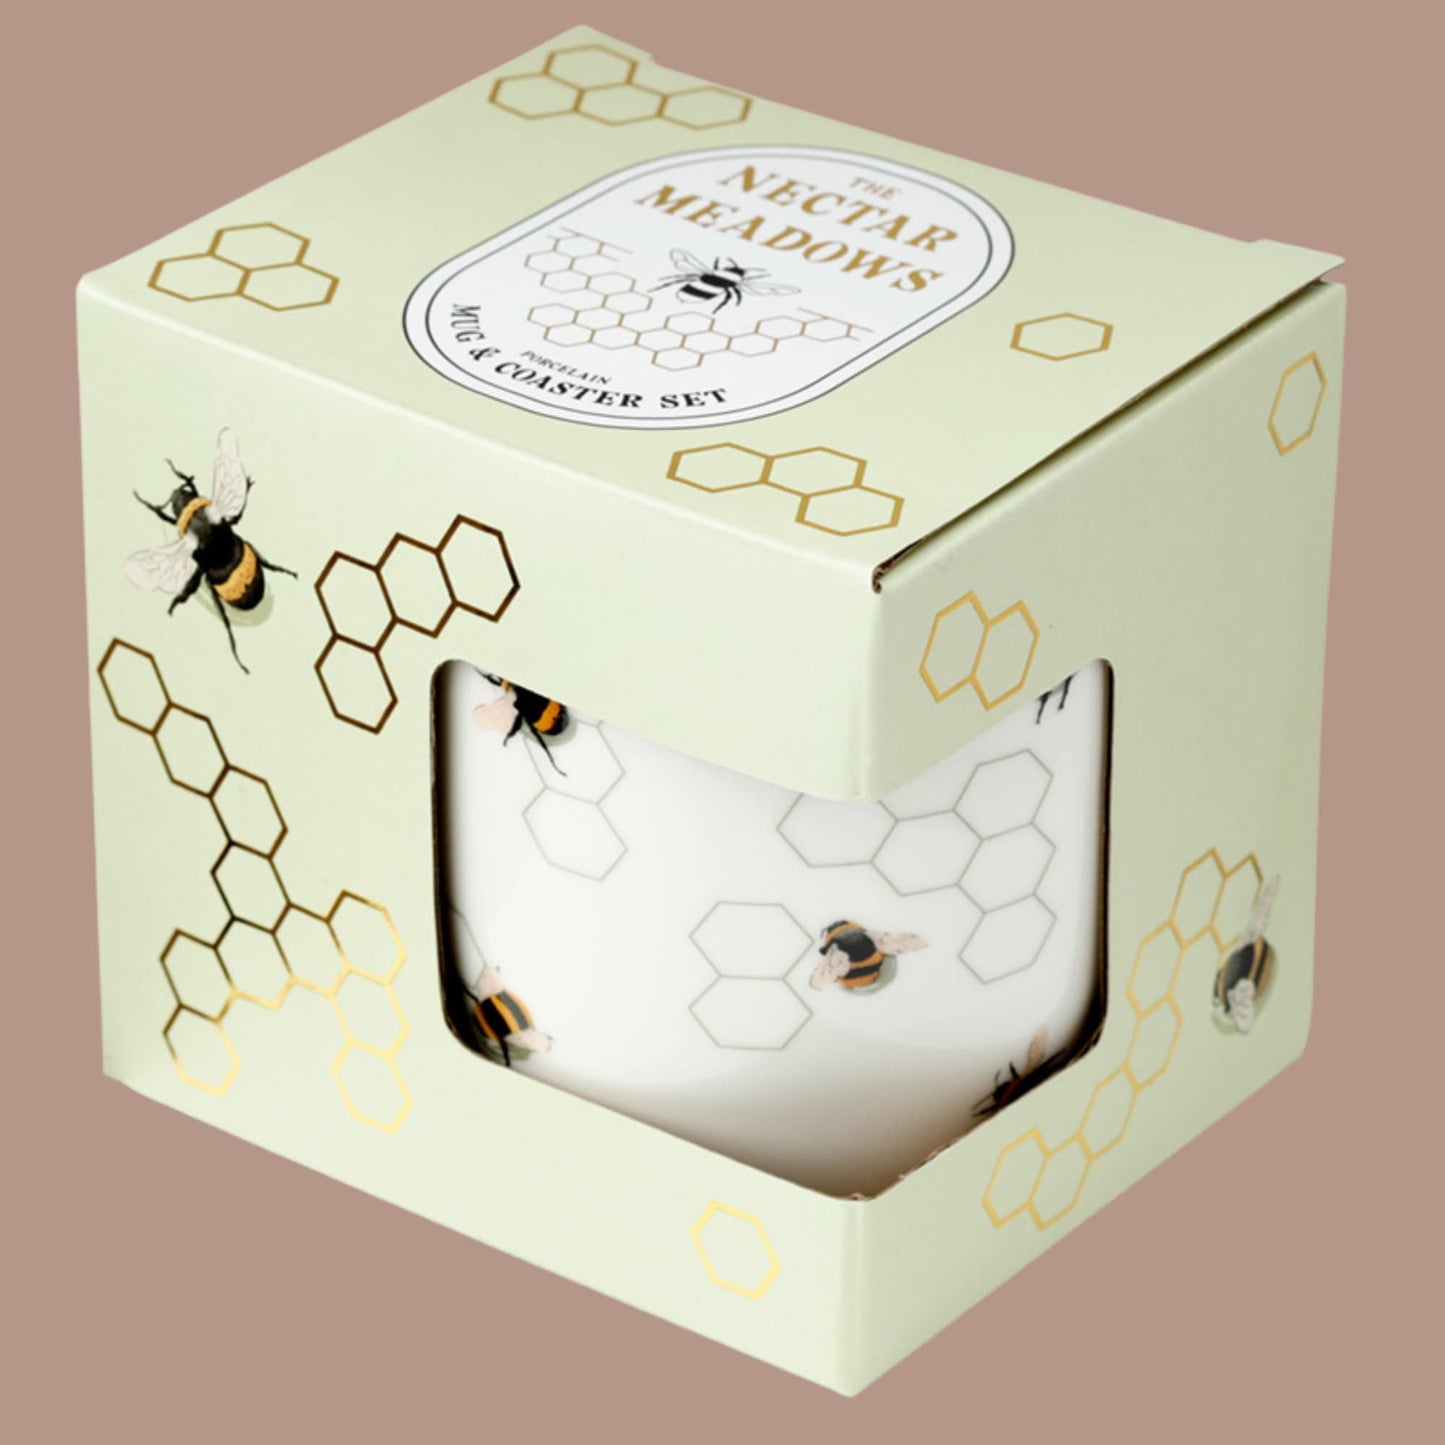 Honey Bee Porcelain Mug And Coaster Set Honey Bee Mug With Coaster Bee Lover Cup And Coaster Set Gift Set Fun Christmas Gift Bee Lover Gift